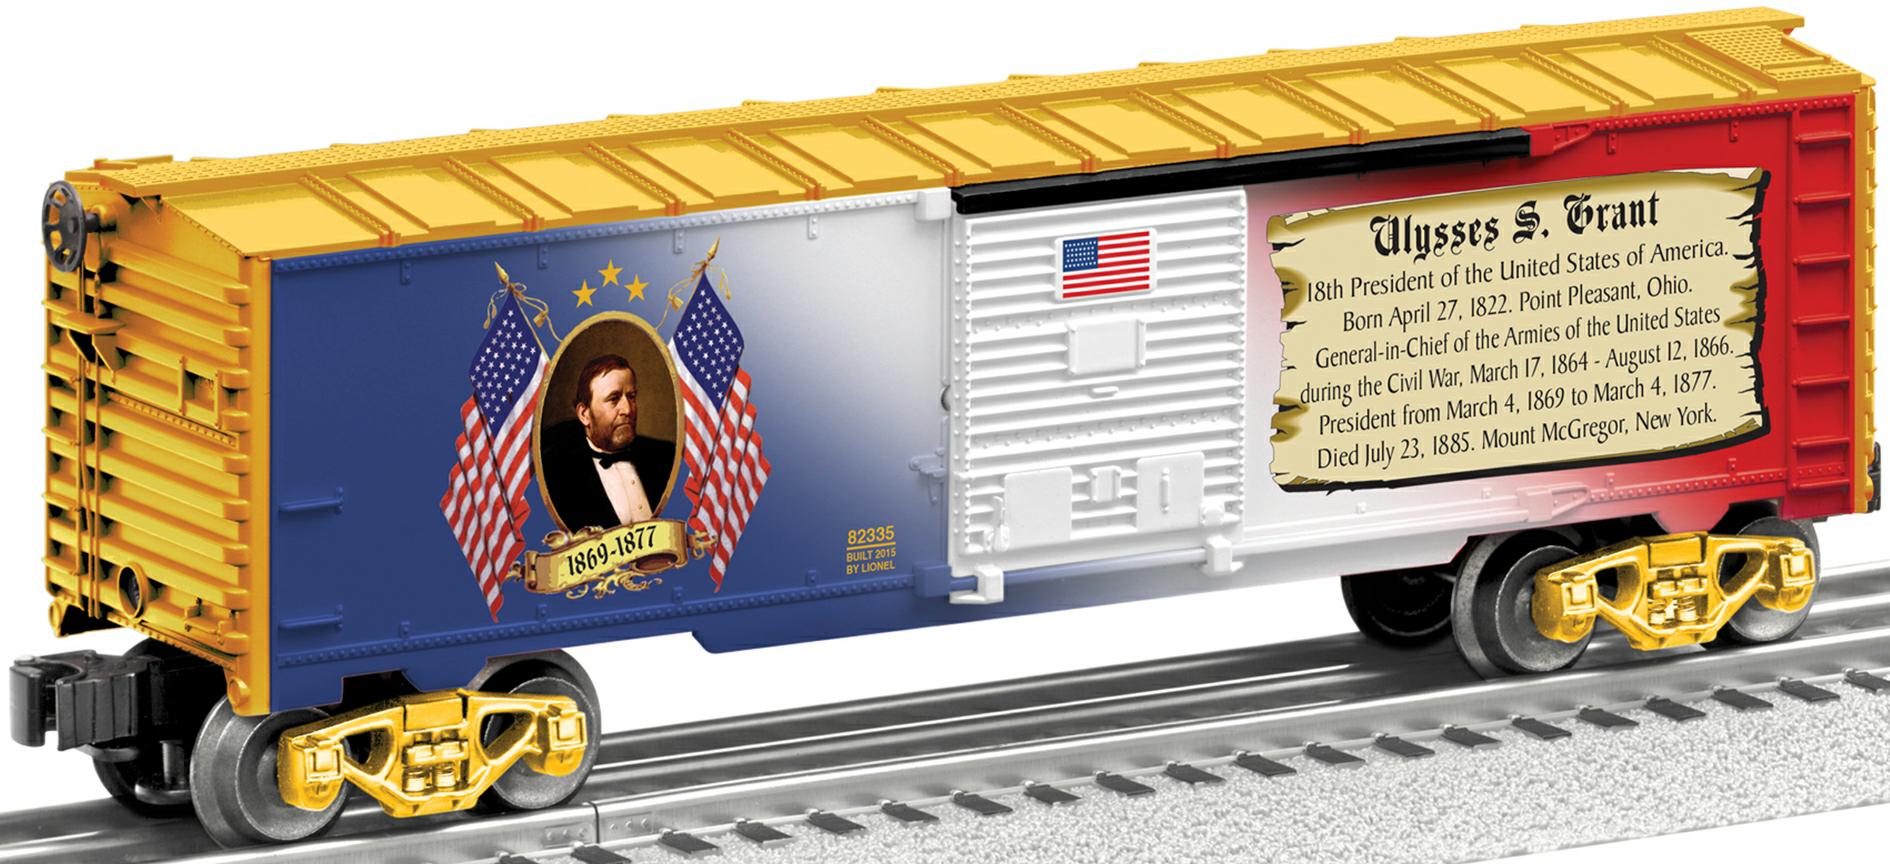 Ulysses S. Grant boxcar image